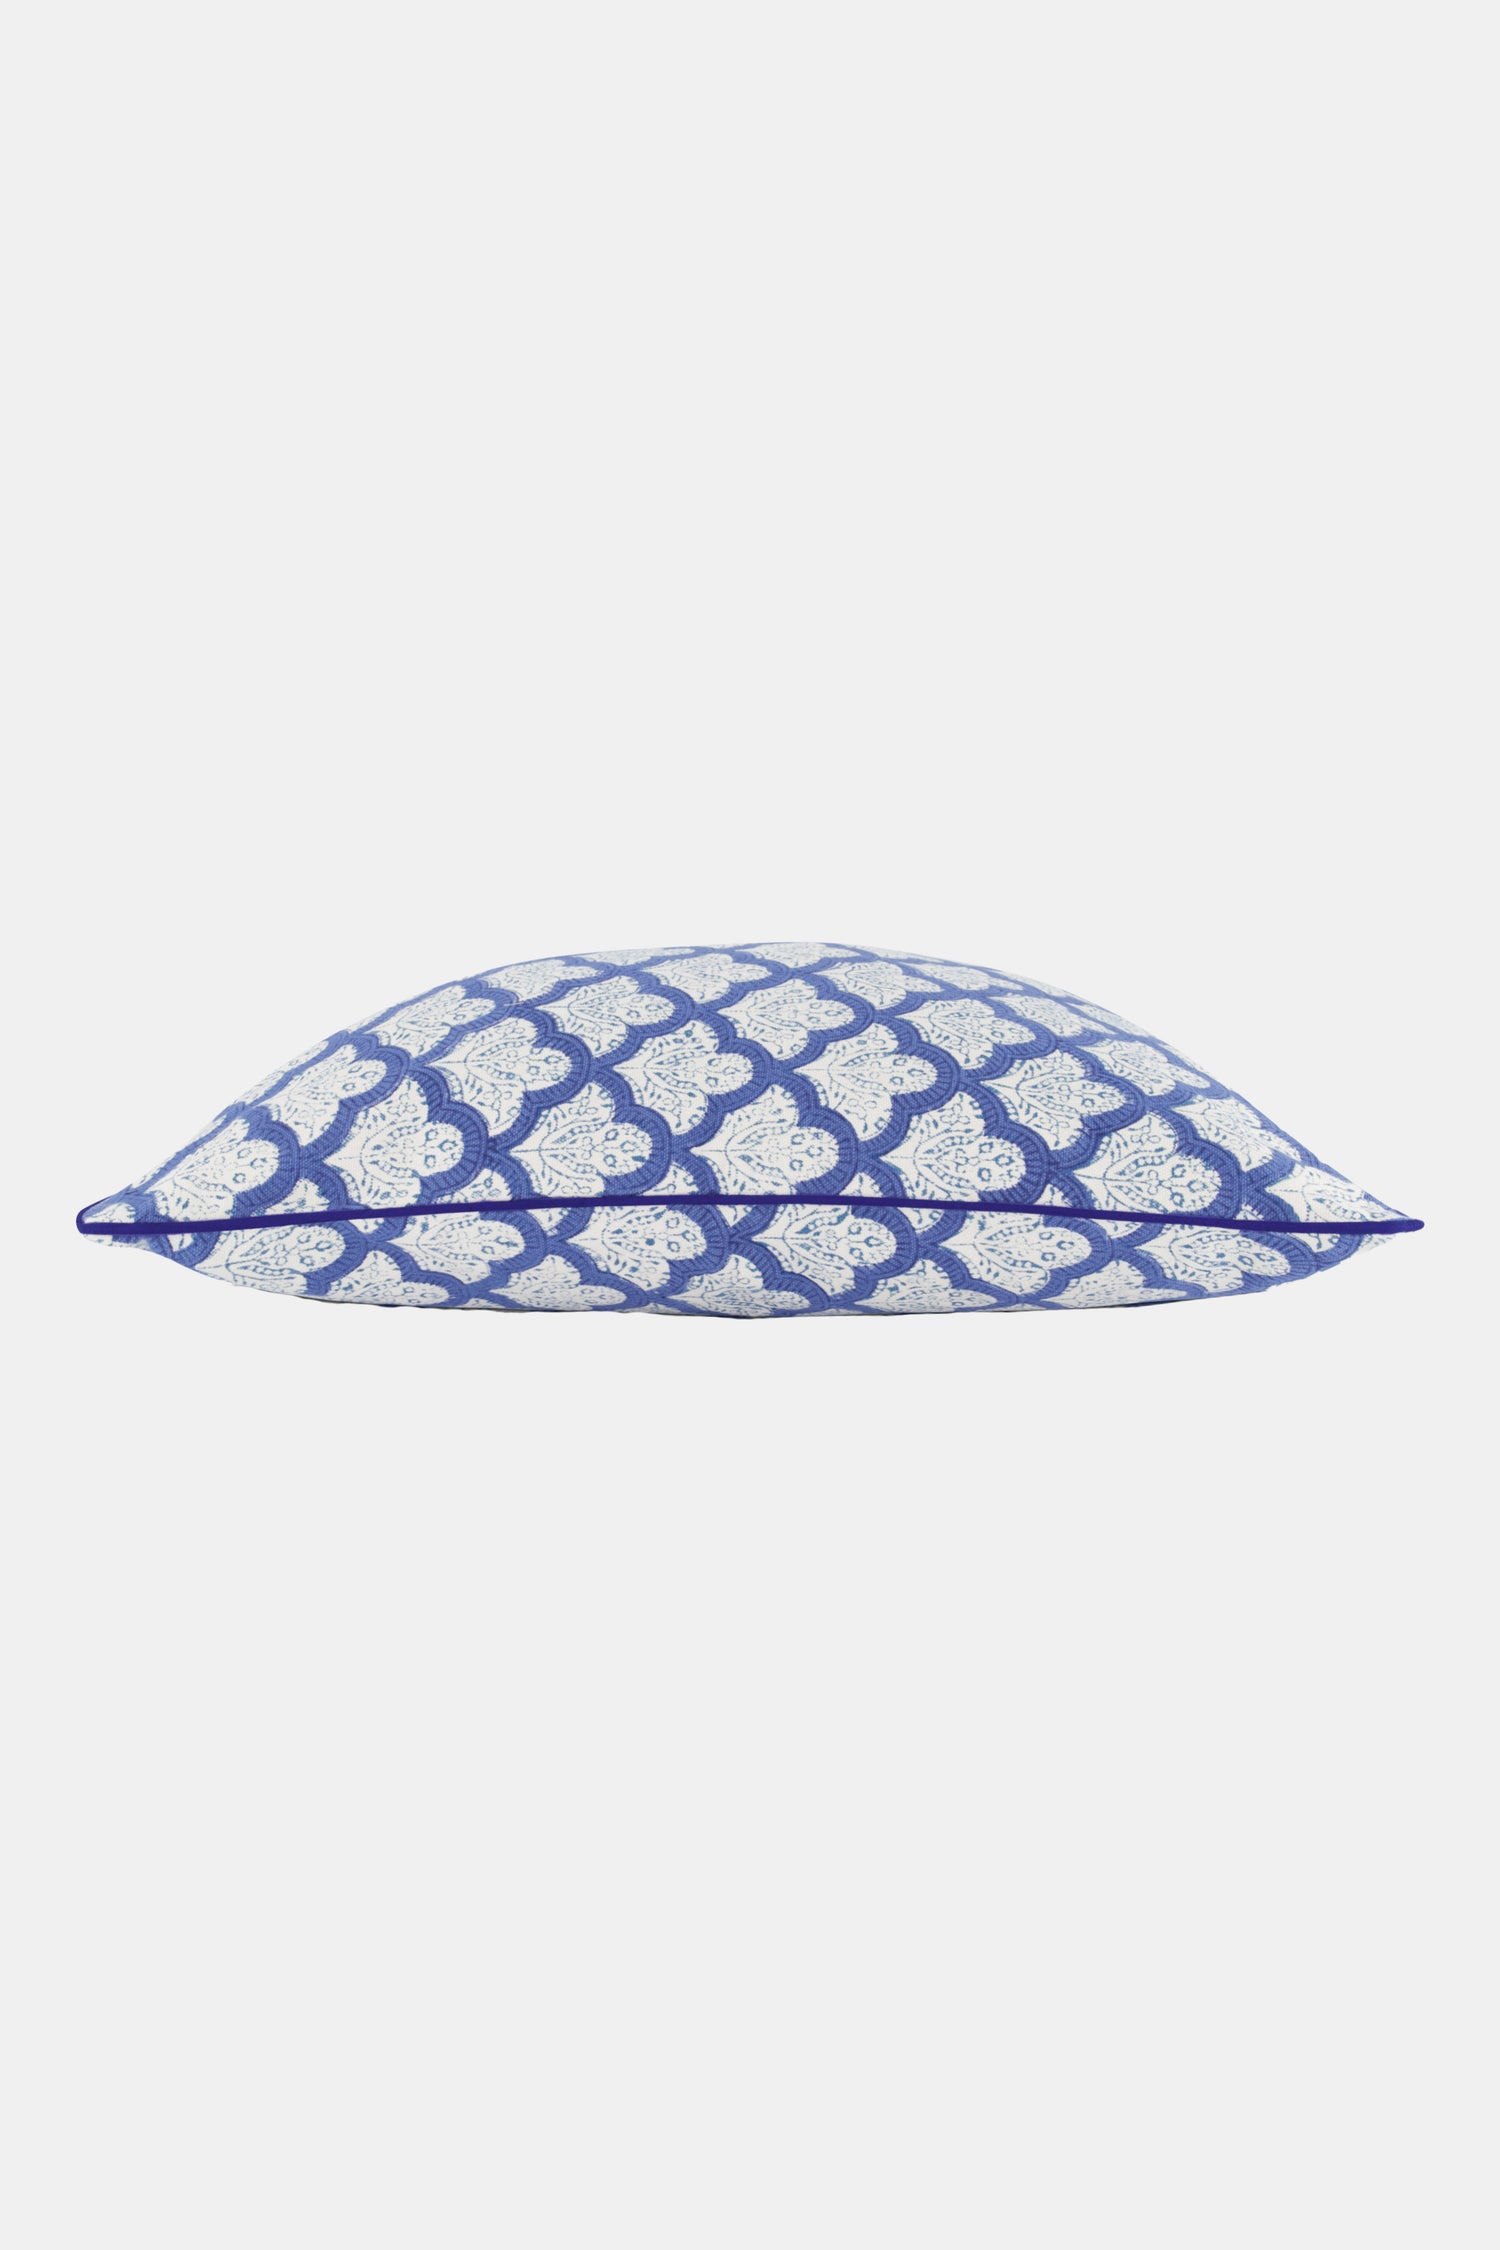 Roller Rabbit Blue Jemina Decorative Pillow